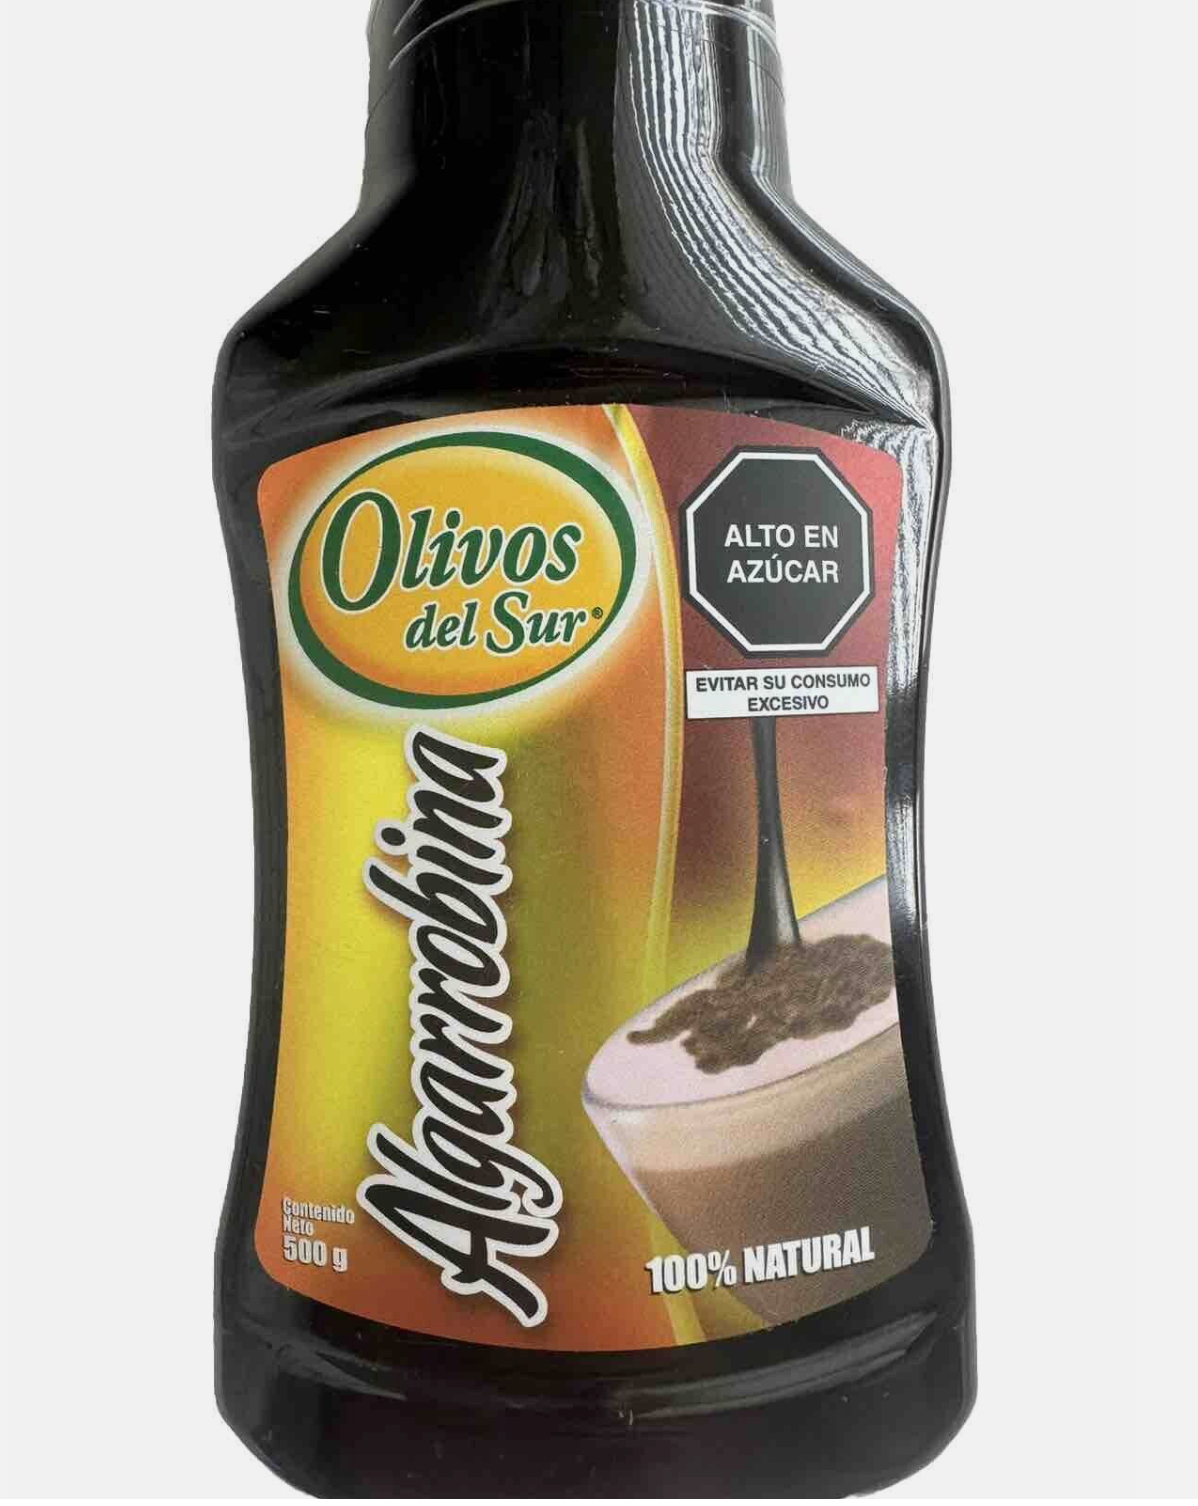 Peruvian Algarrobina Olivos del Sur 500 g